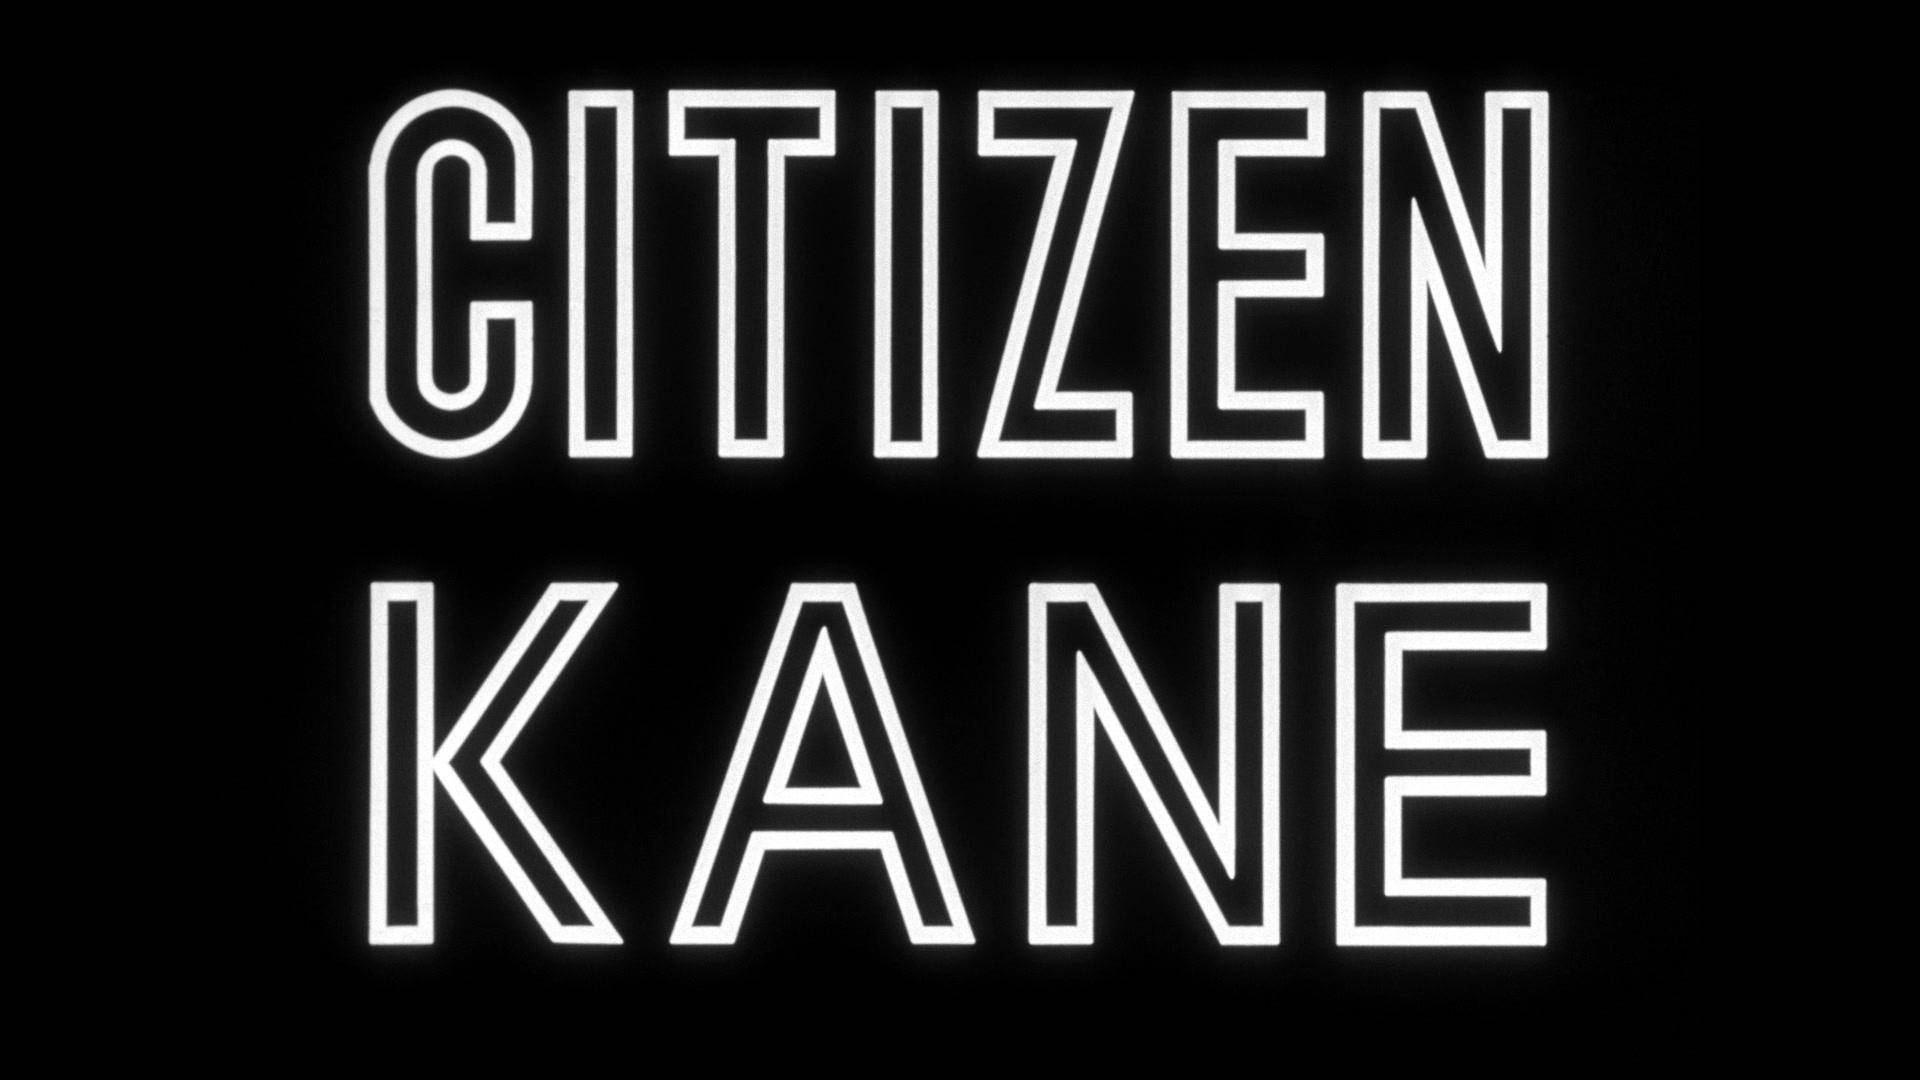 Citizen Kane Title Text Wallpaper